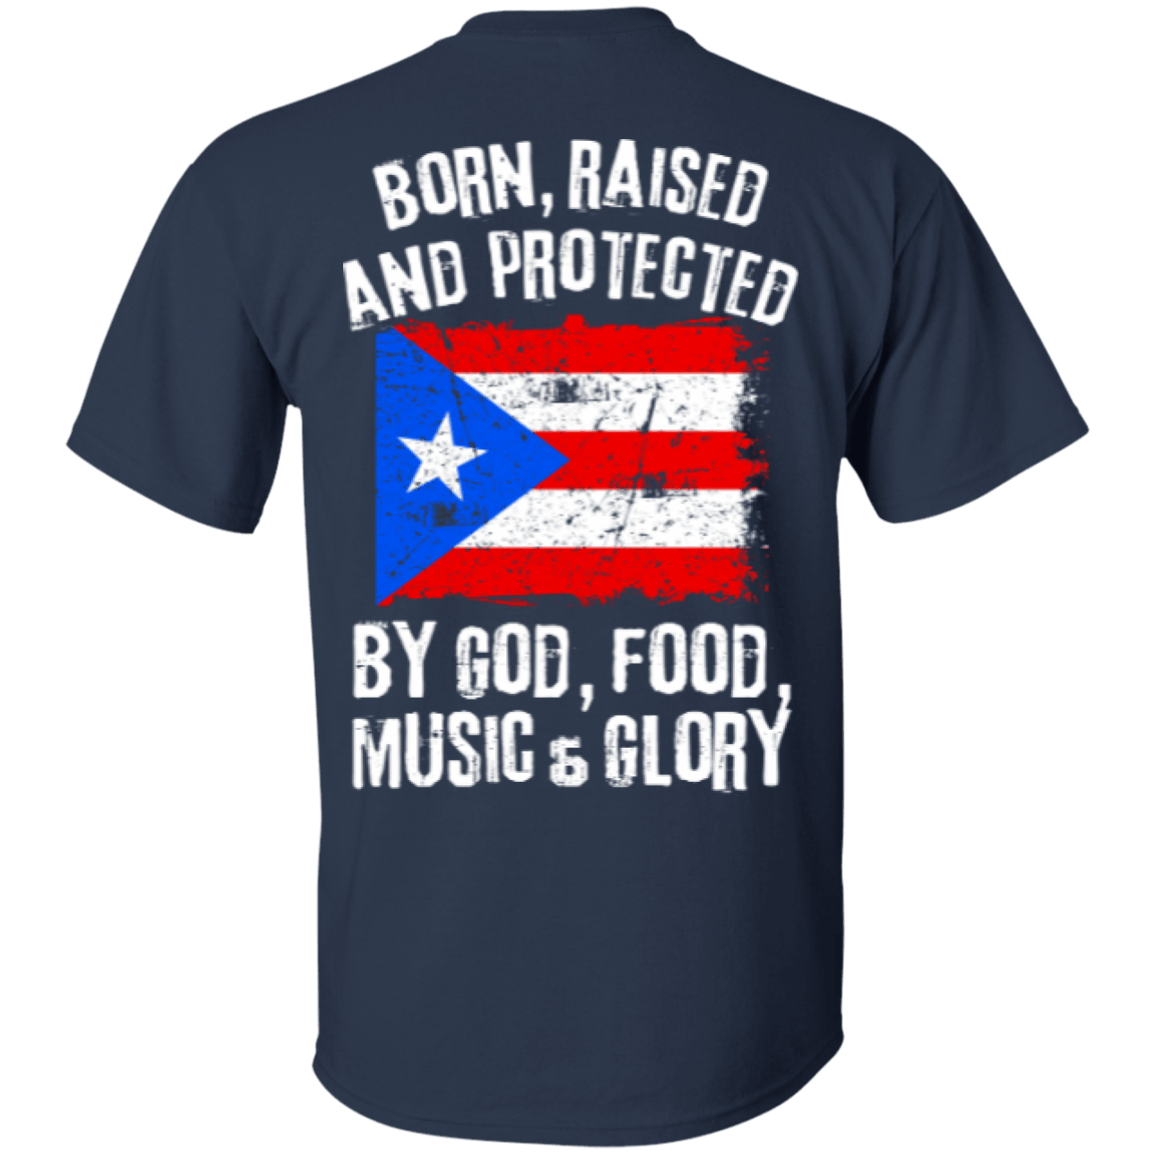 Shirt - God, Food, Music & Glory